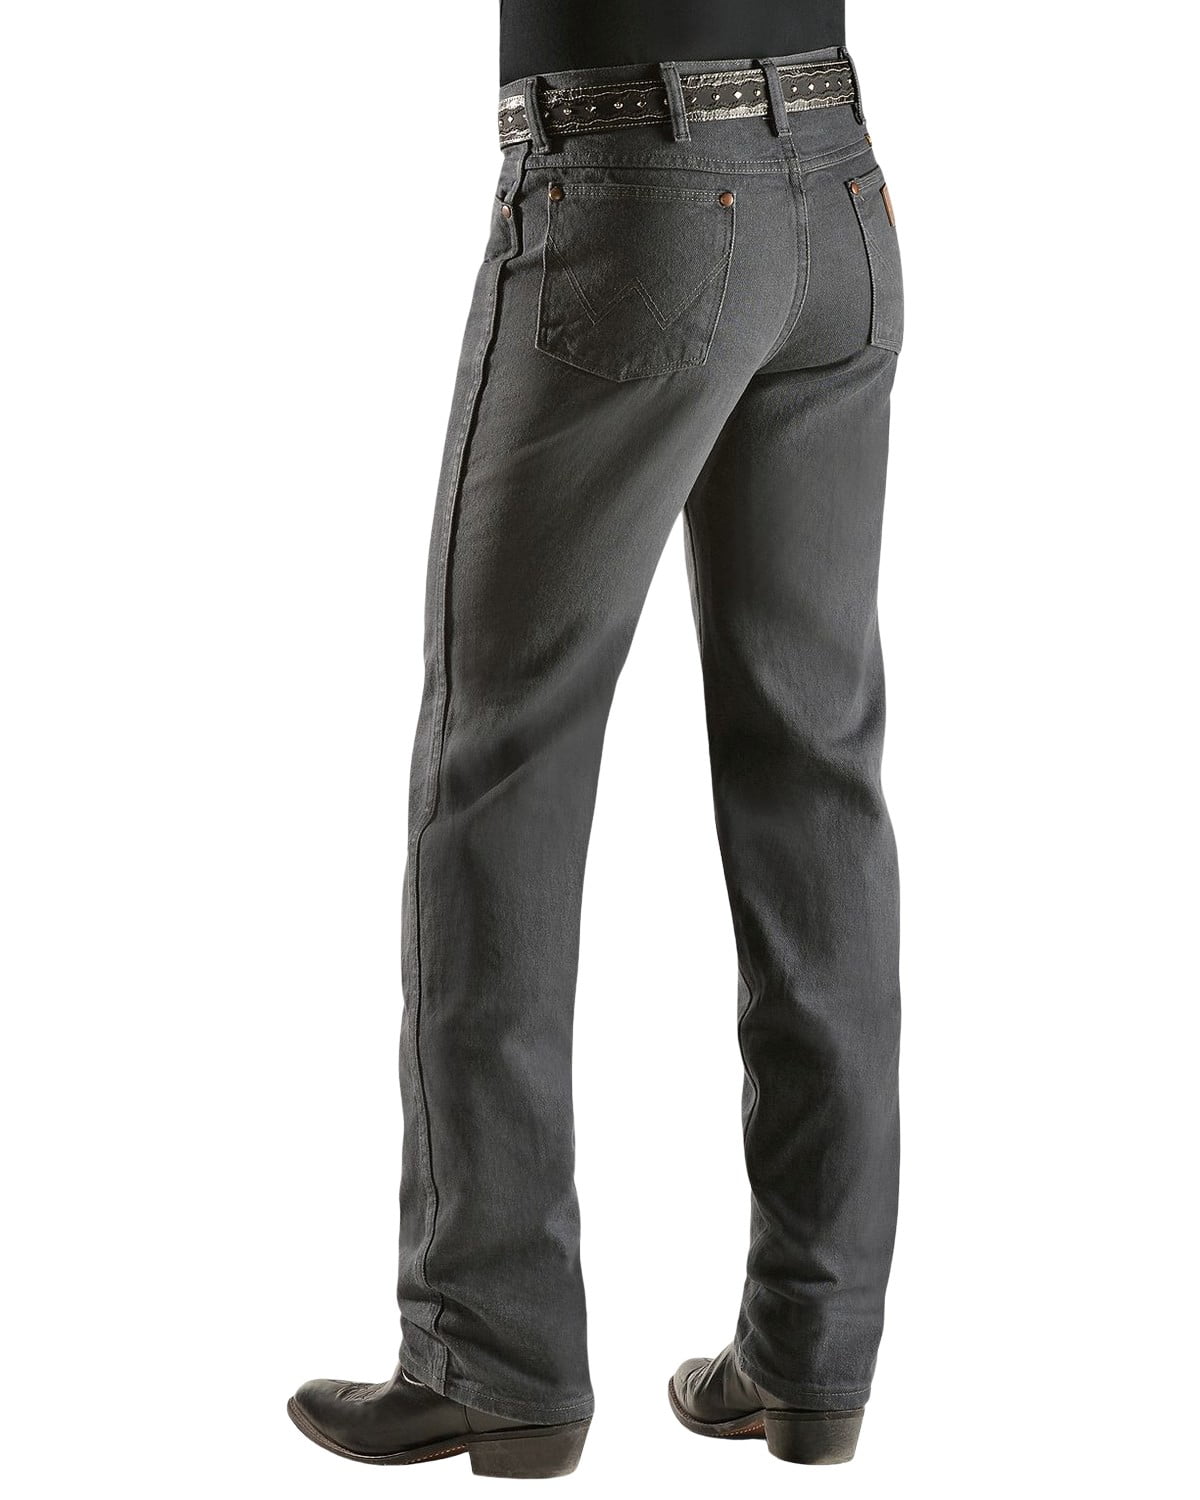 MENS Wrangler® Cowboy Cut® Slim Fit Jean(#0936) 12 Colors